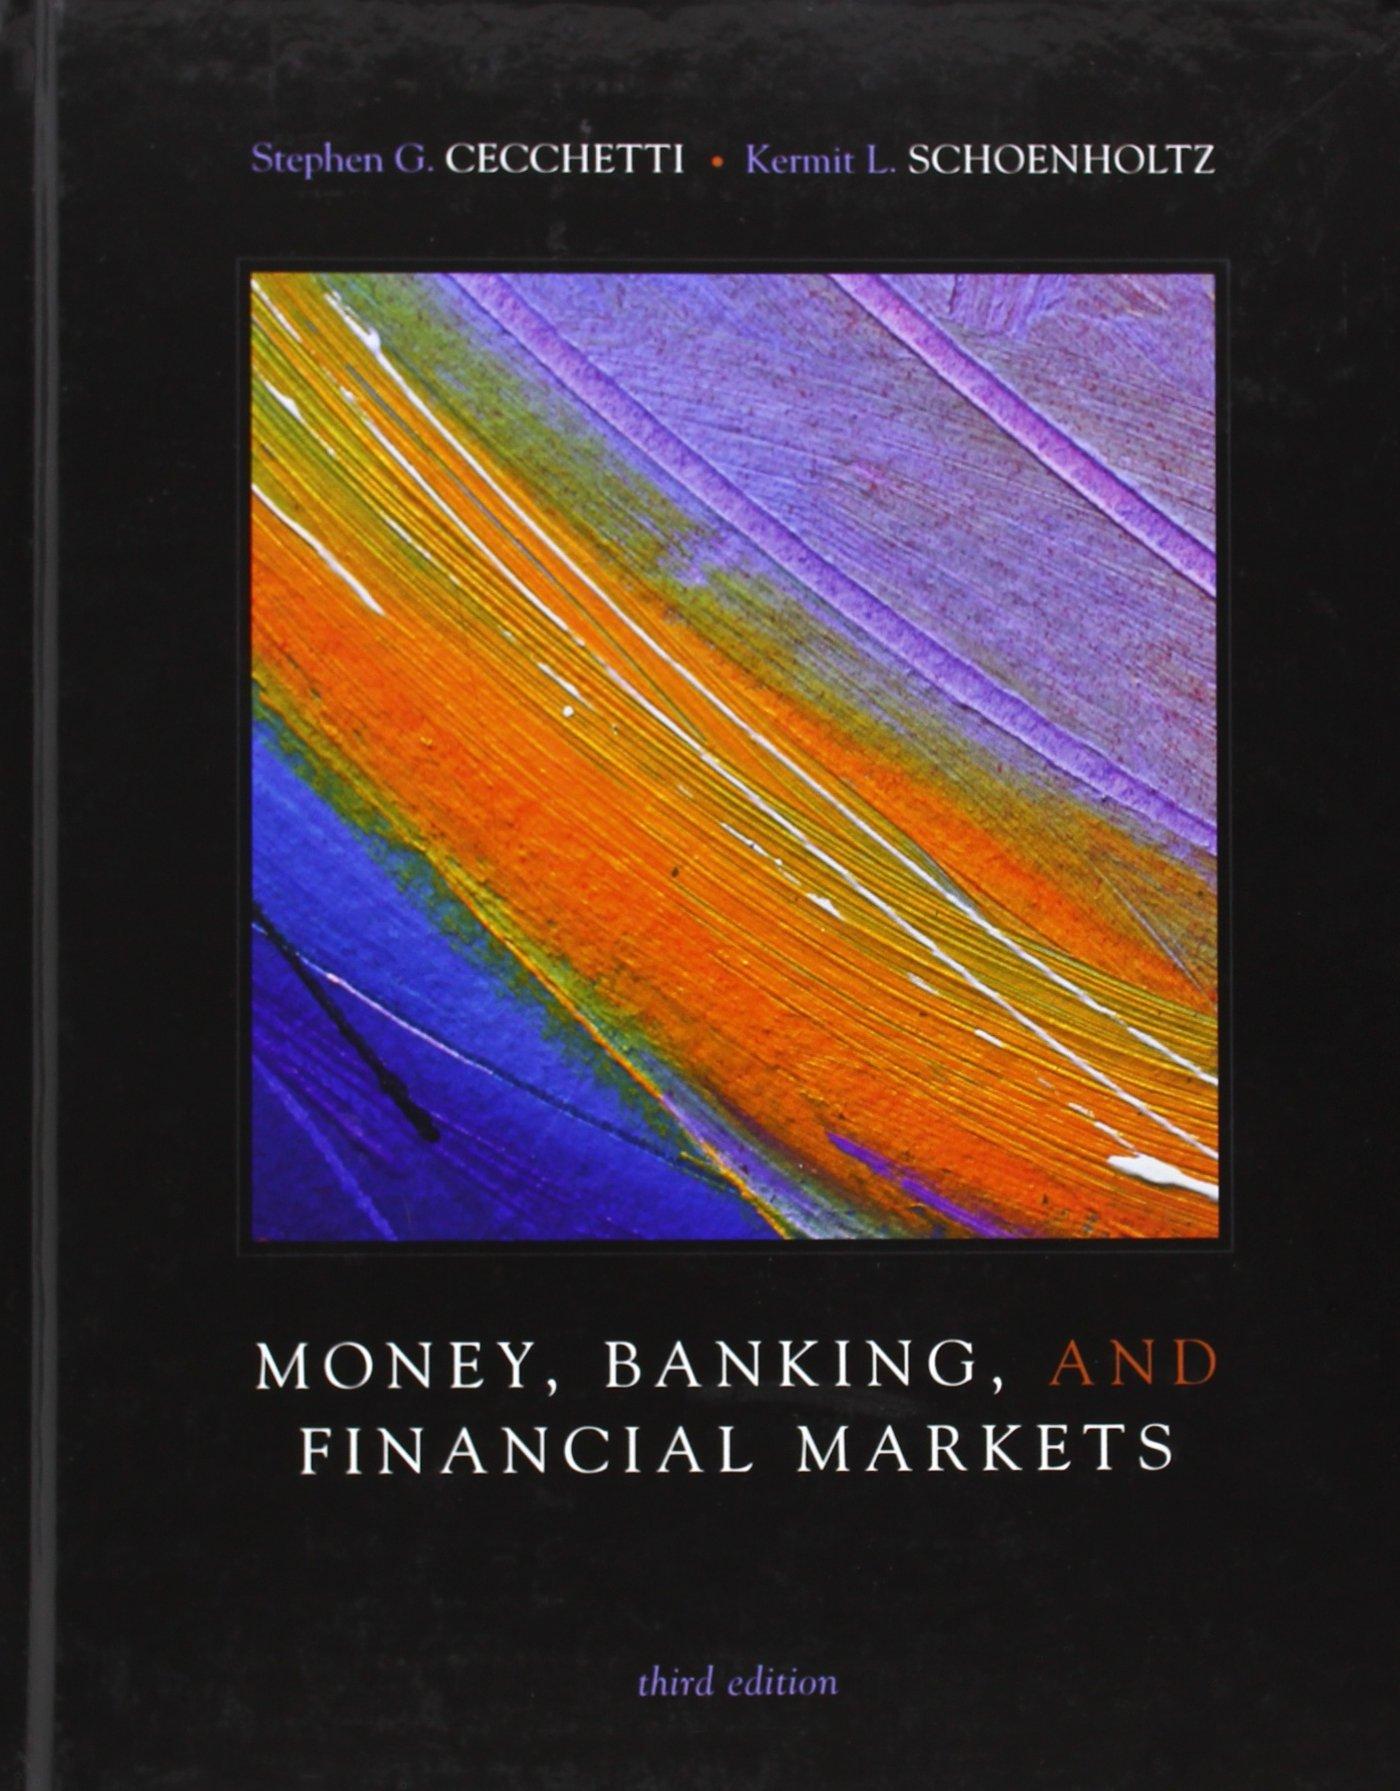 money banking and financial markets 3rd edition stephen cecchetti, kermit schoenholtz 007337590x,